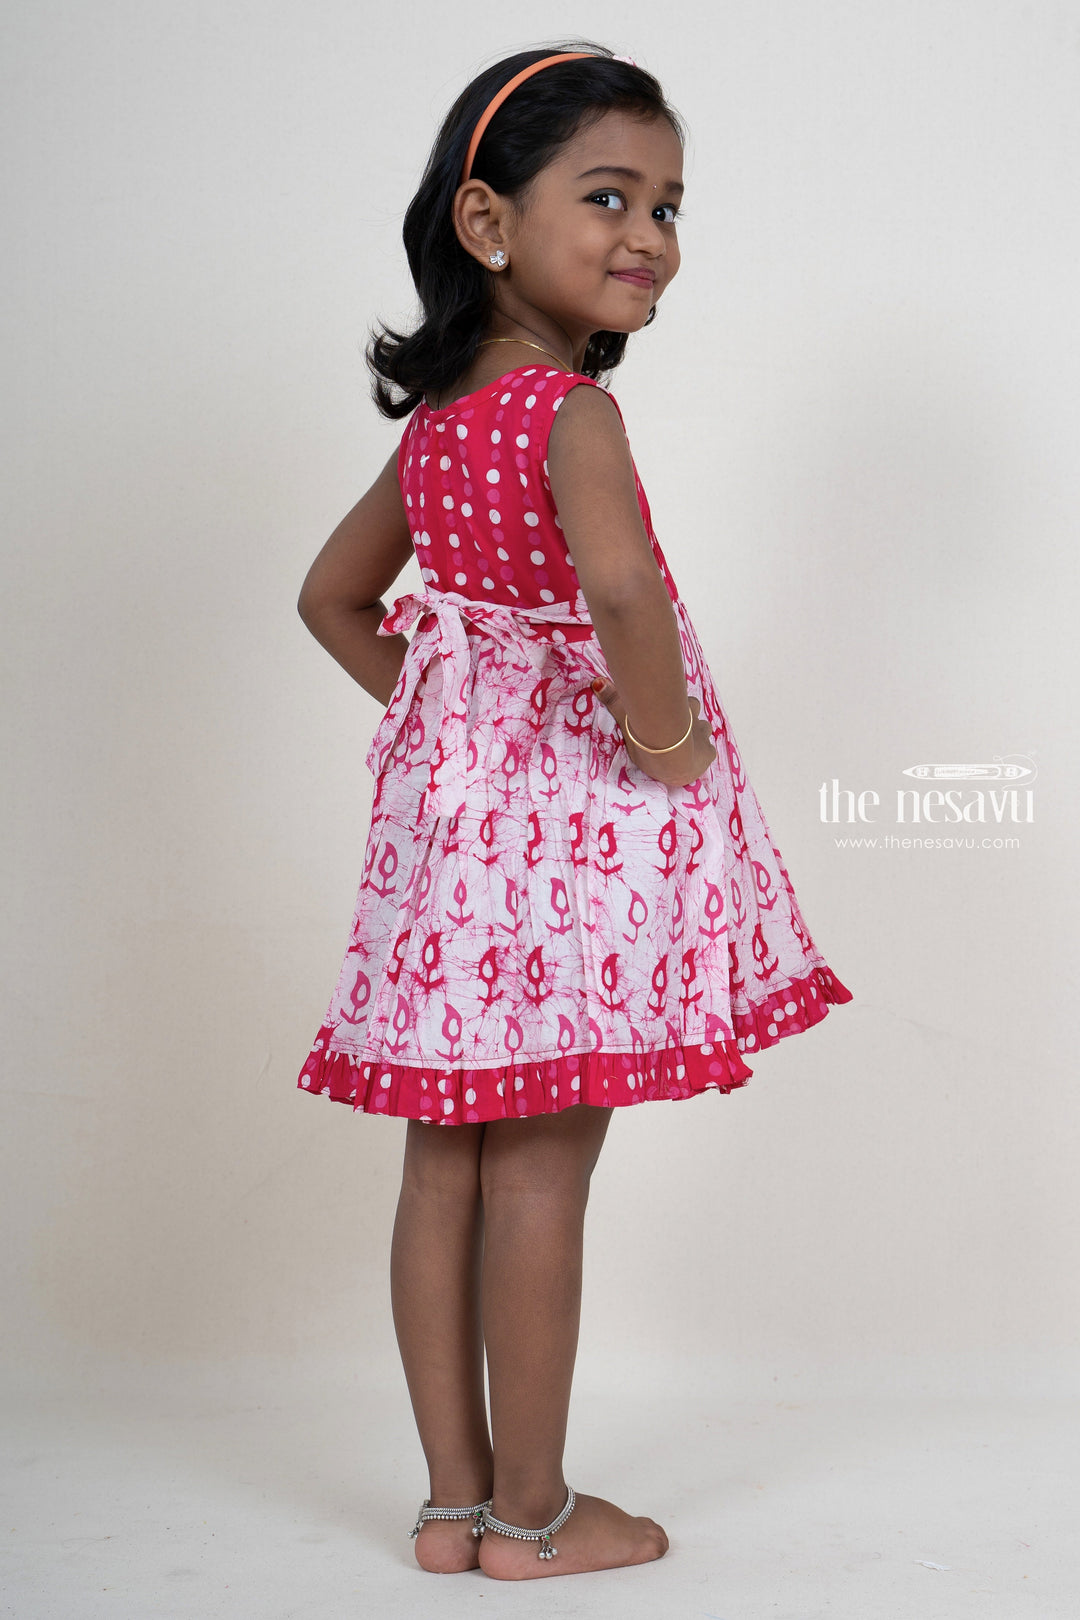 The Nesavu Baby Frock / Jhabla Hot Pink Pin-Tucked Tie-Dyed Sleeveless Cotton Gown For Baby Girls psr silks Nesavu